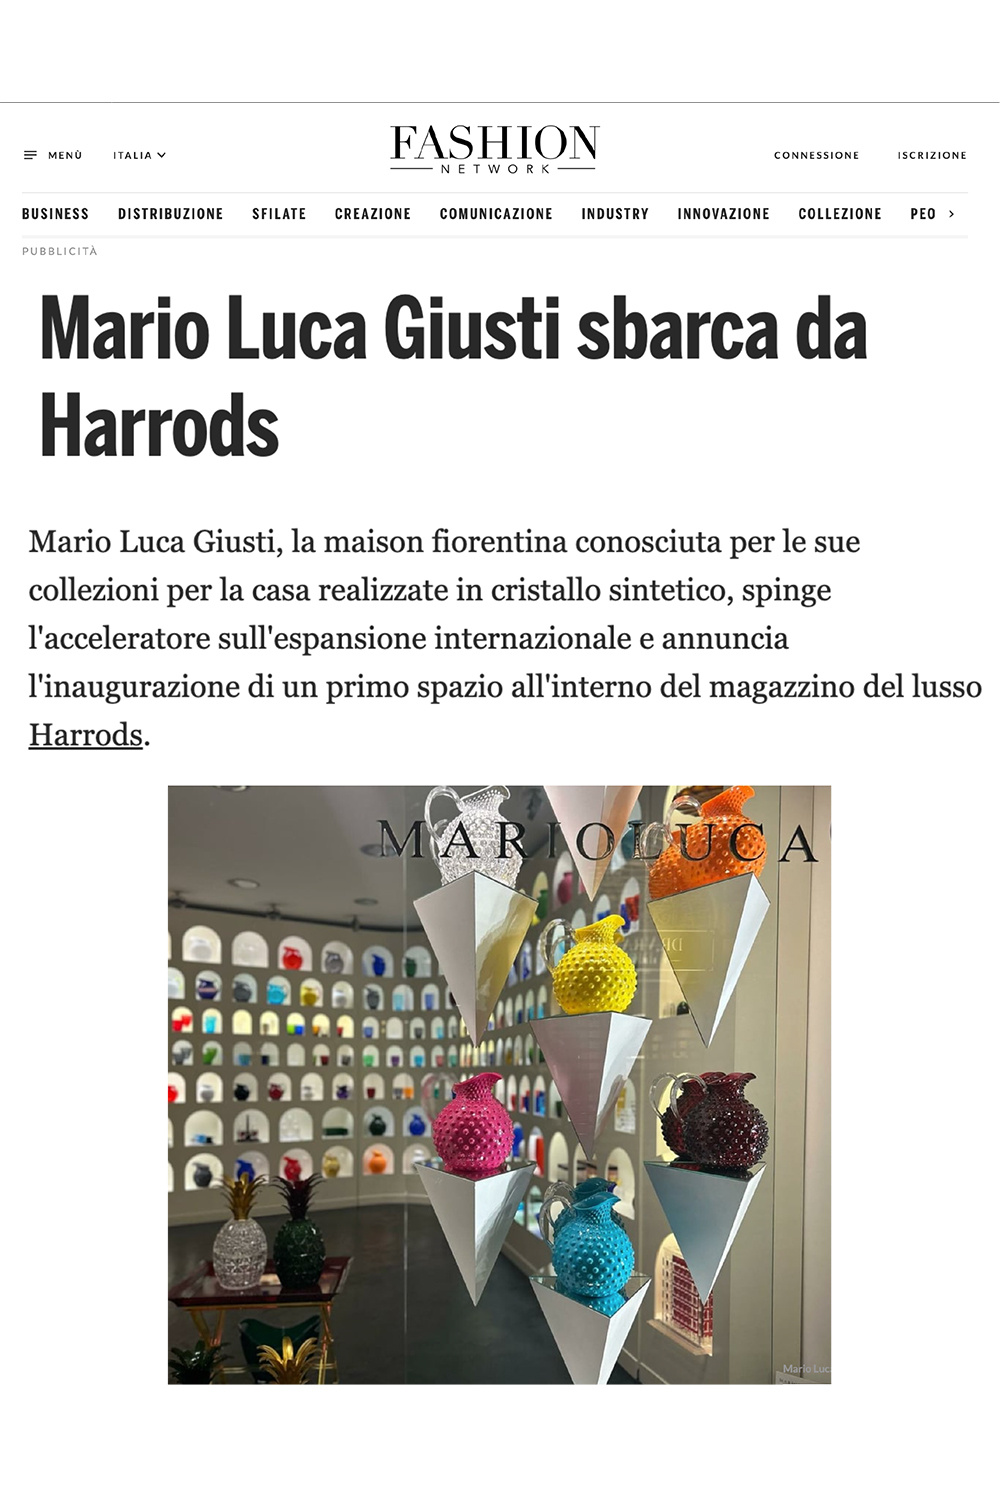 MARIO LUCA GIUSTI SBARCA DA HARRODS